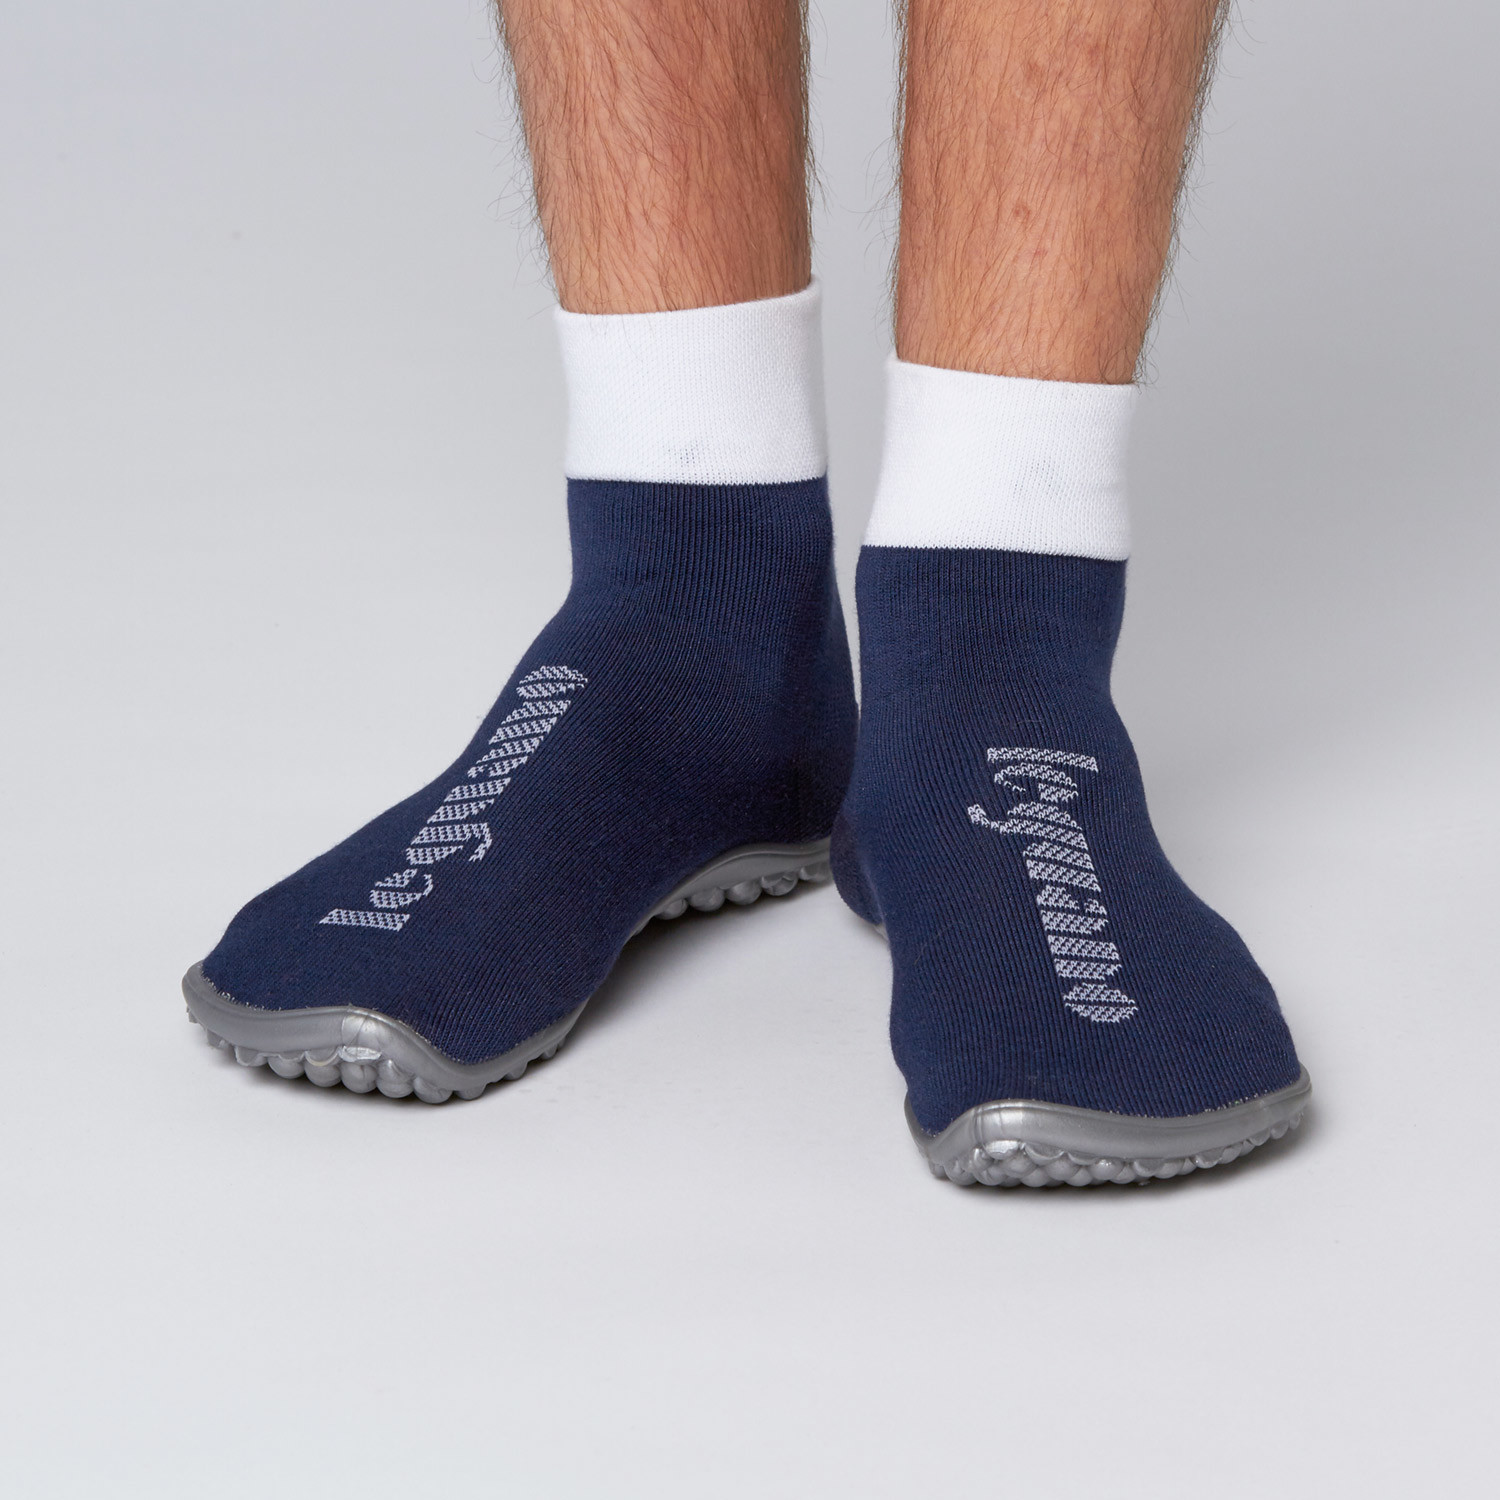 Premium Barefoot Shoe // Marine Blue (Size XS // 4.5-5.5) - Leguano ...